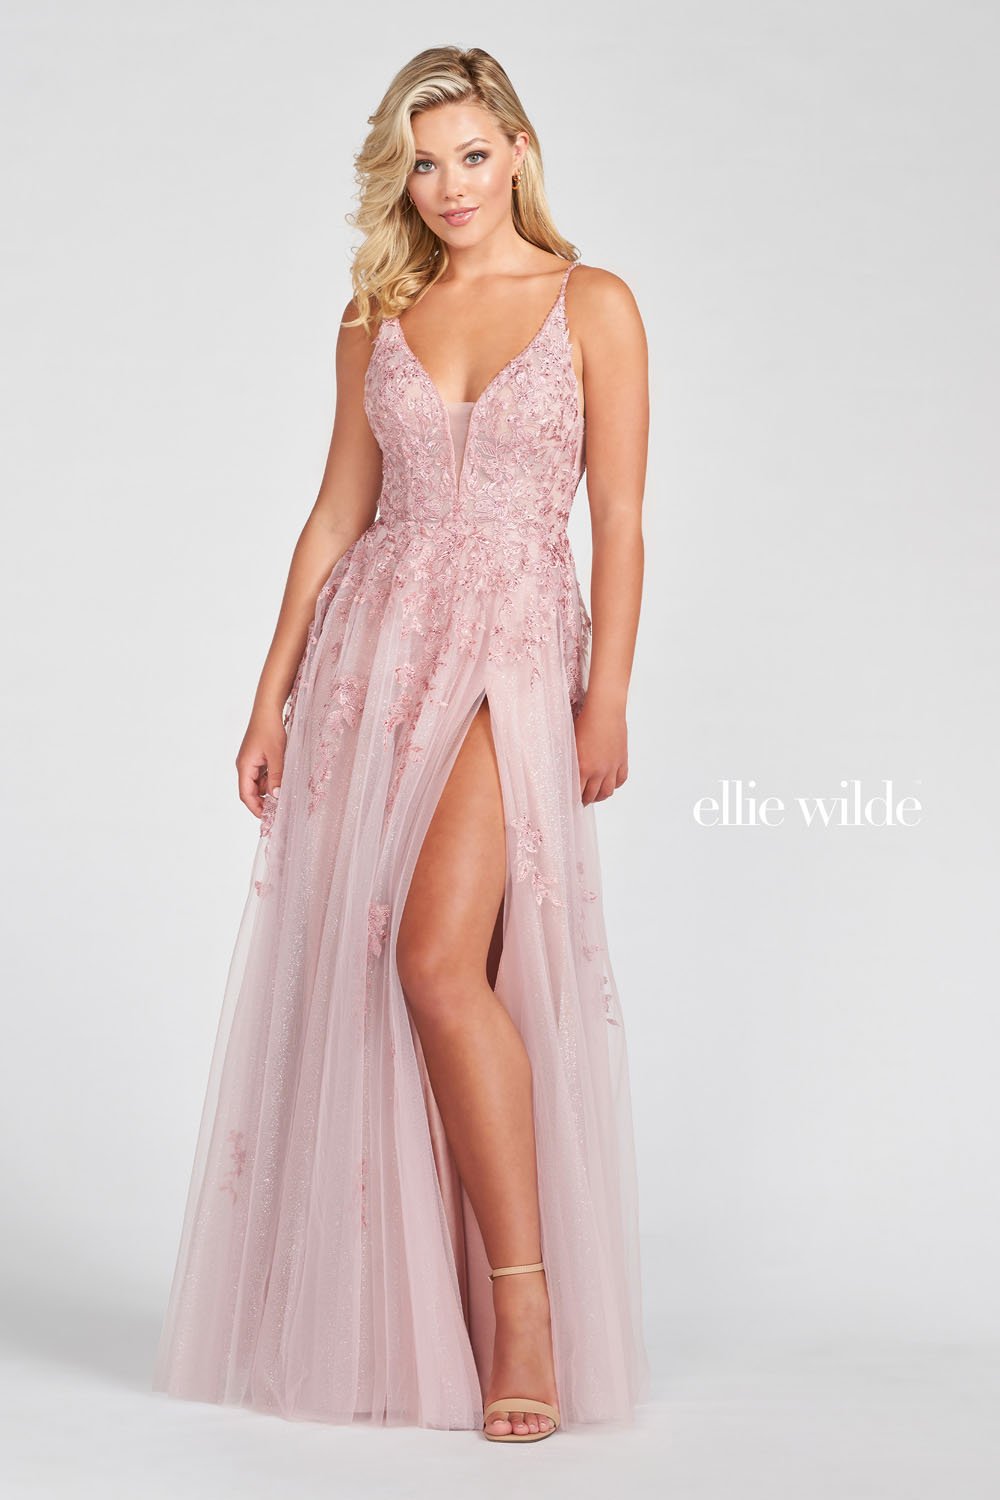 Ellie Wilde Rose EW122102 Prom Dress Image.  Rose formal dress.